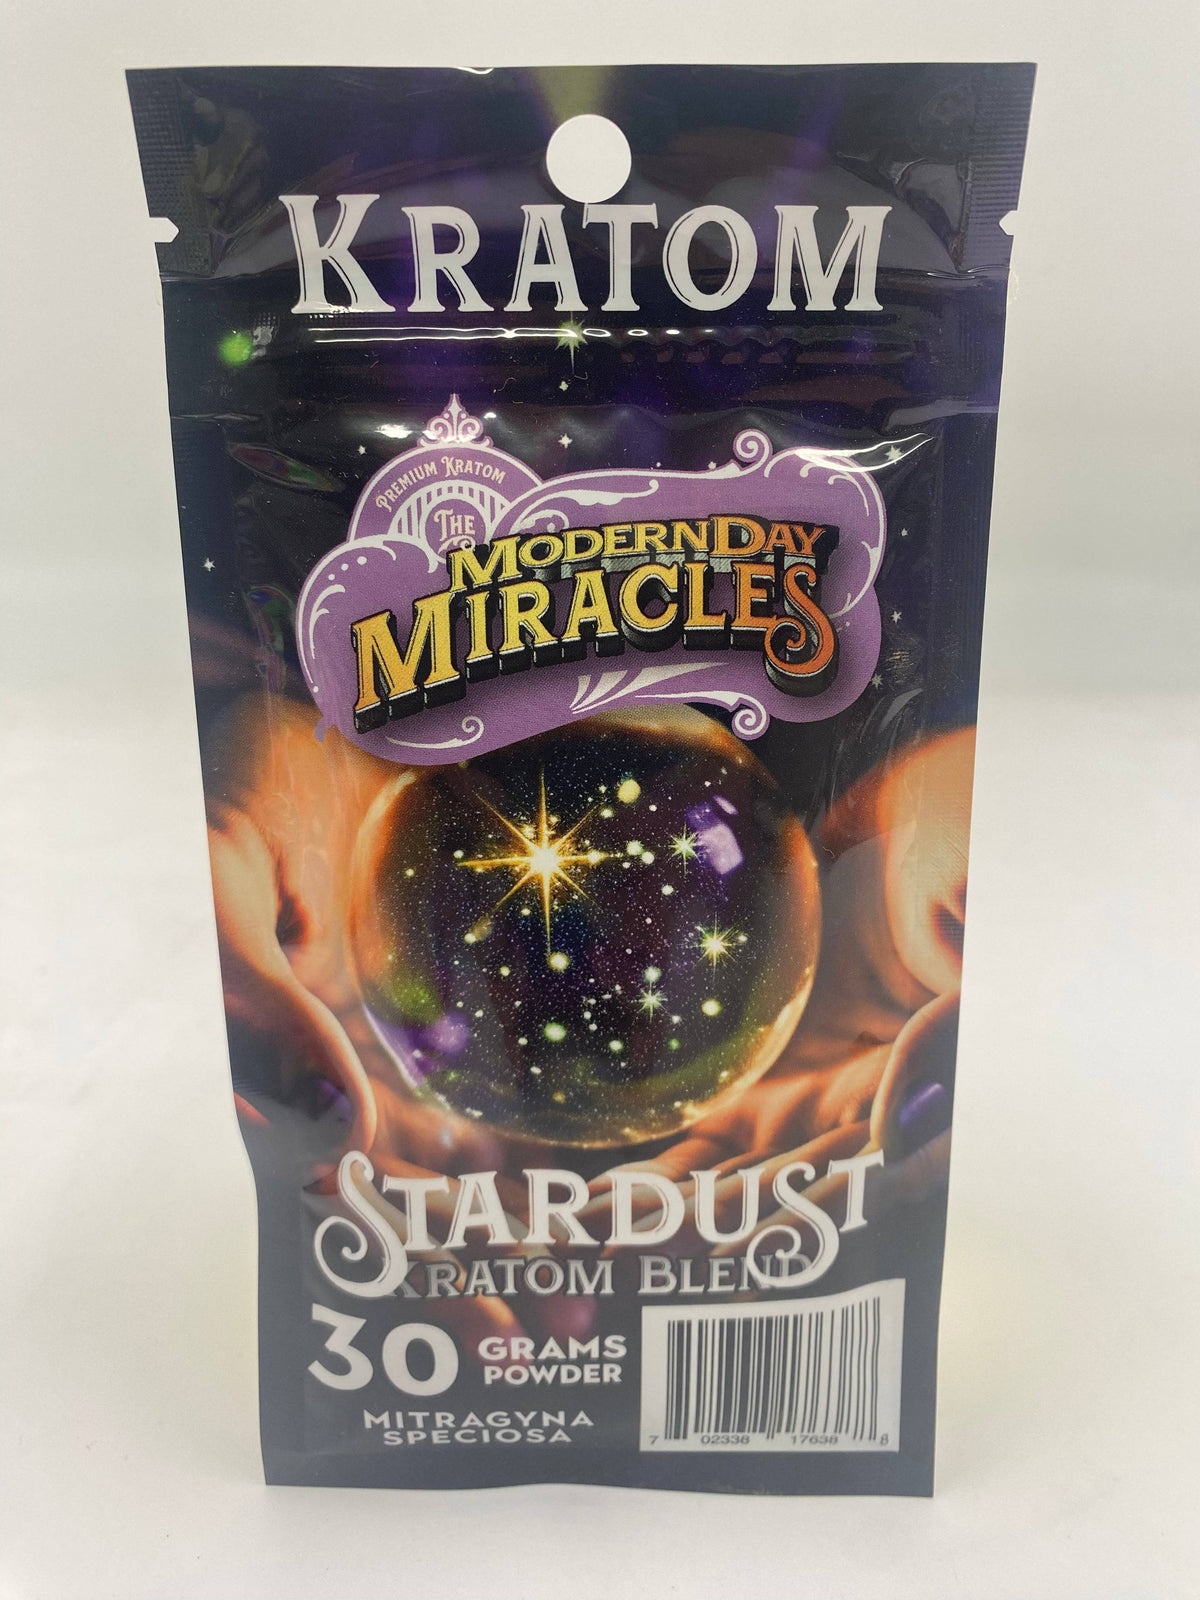 Modern Day Miracles Space Blends-Stardust Green Kratom Vietnam Blend 30 Gram Powder